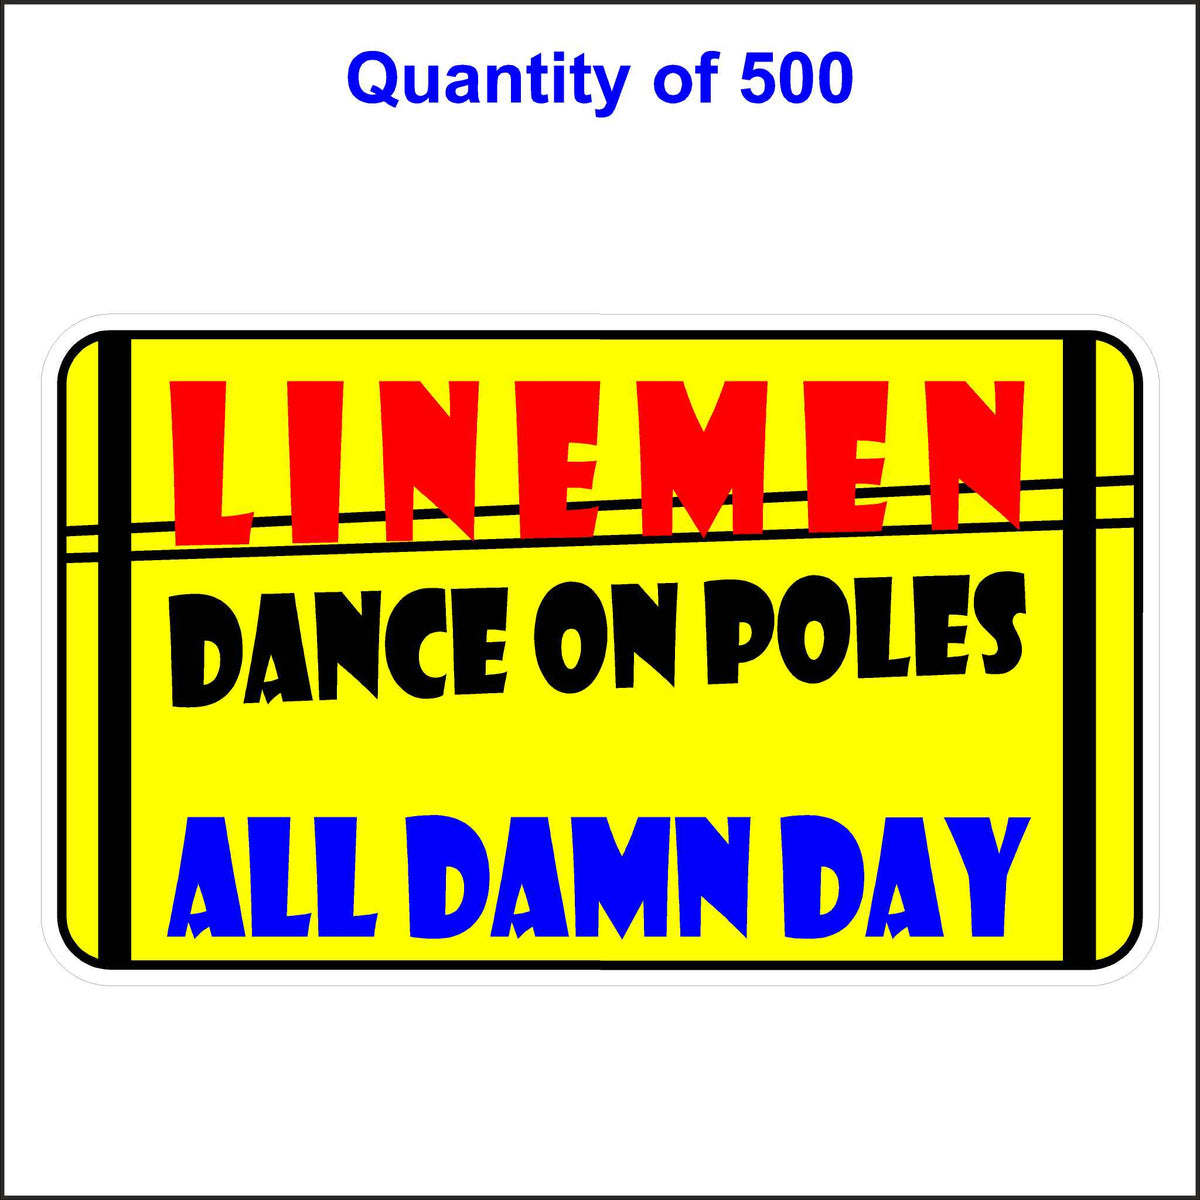 Lineman Dance on Poles All Damn Day Sticker. 500 Quantity.